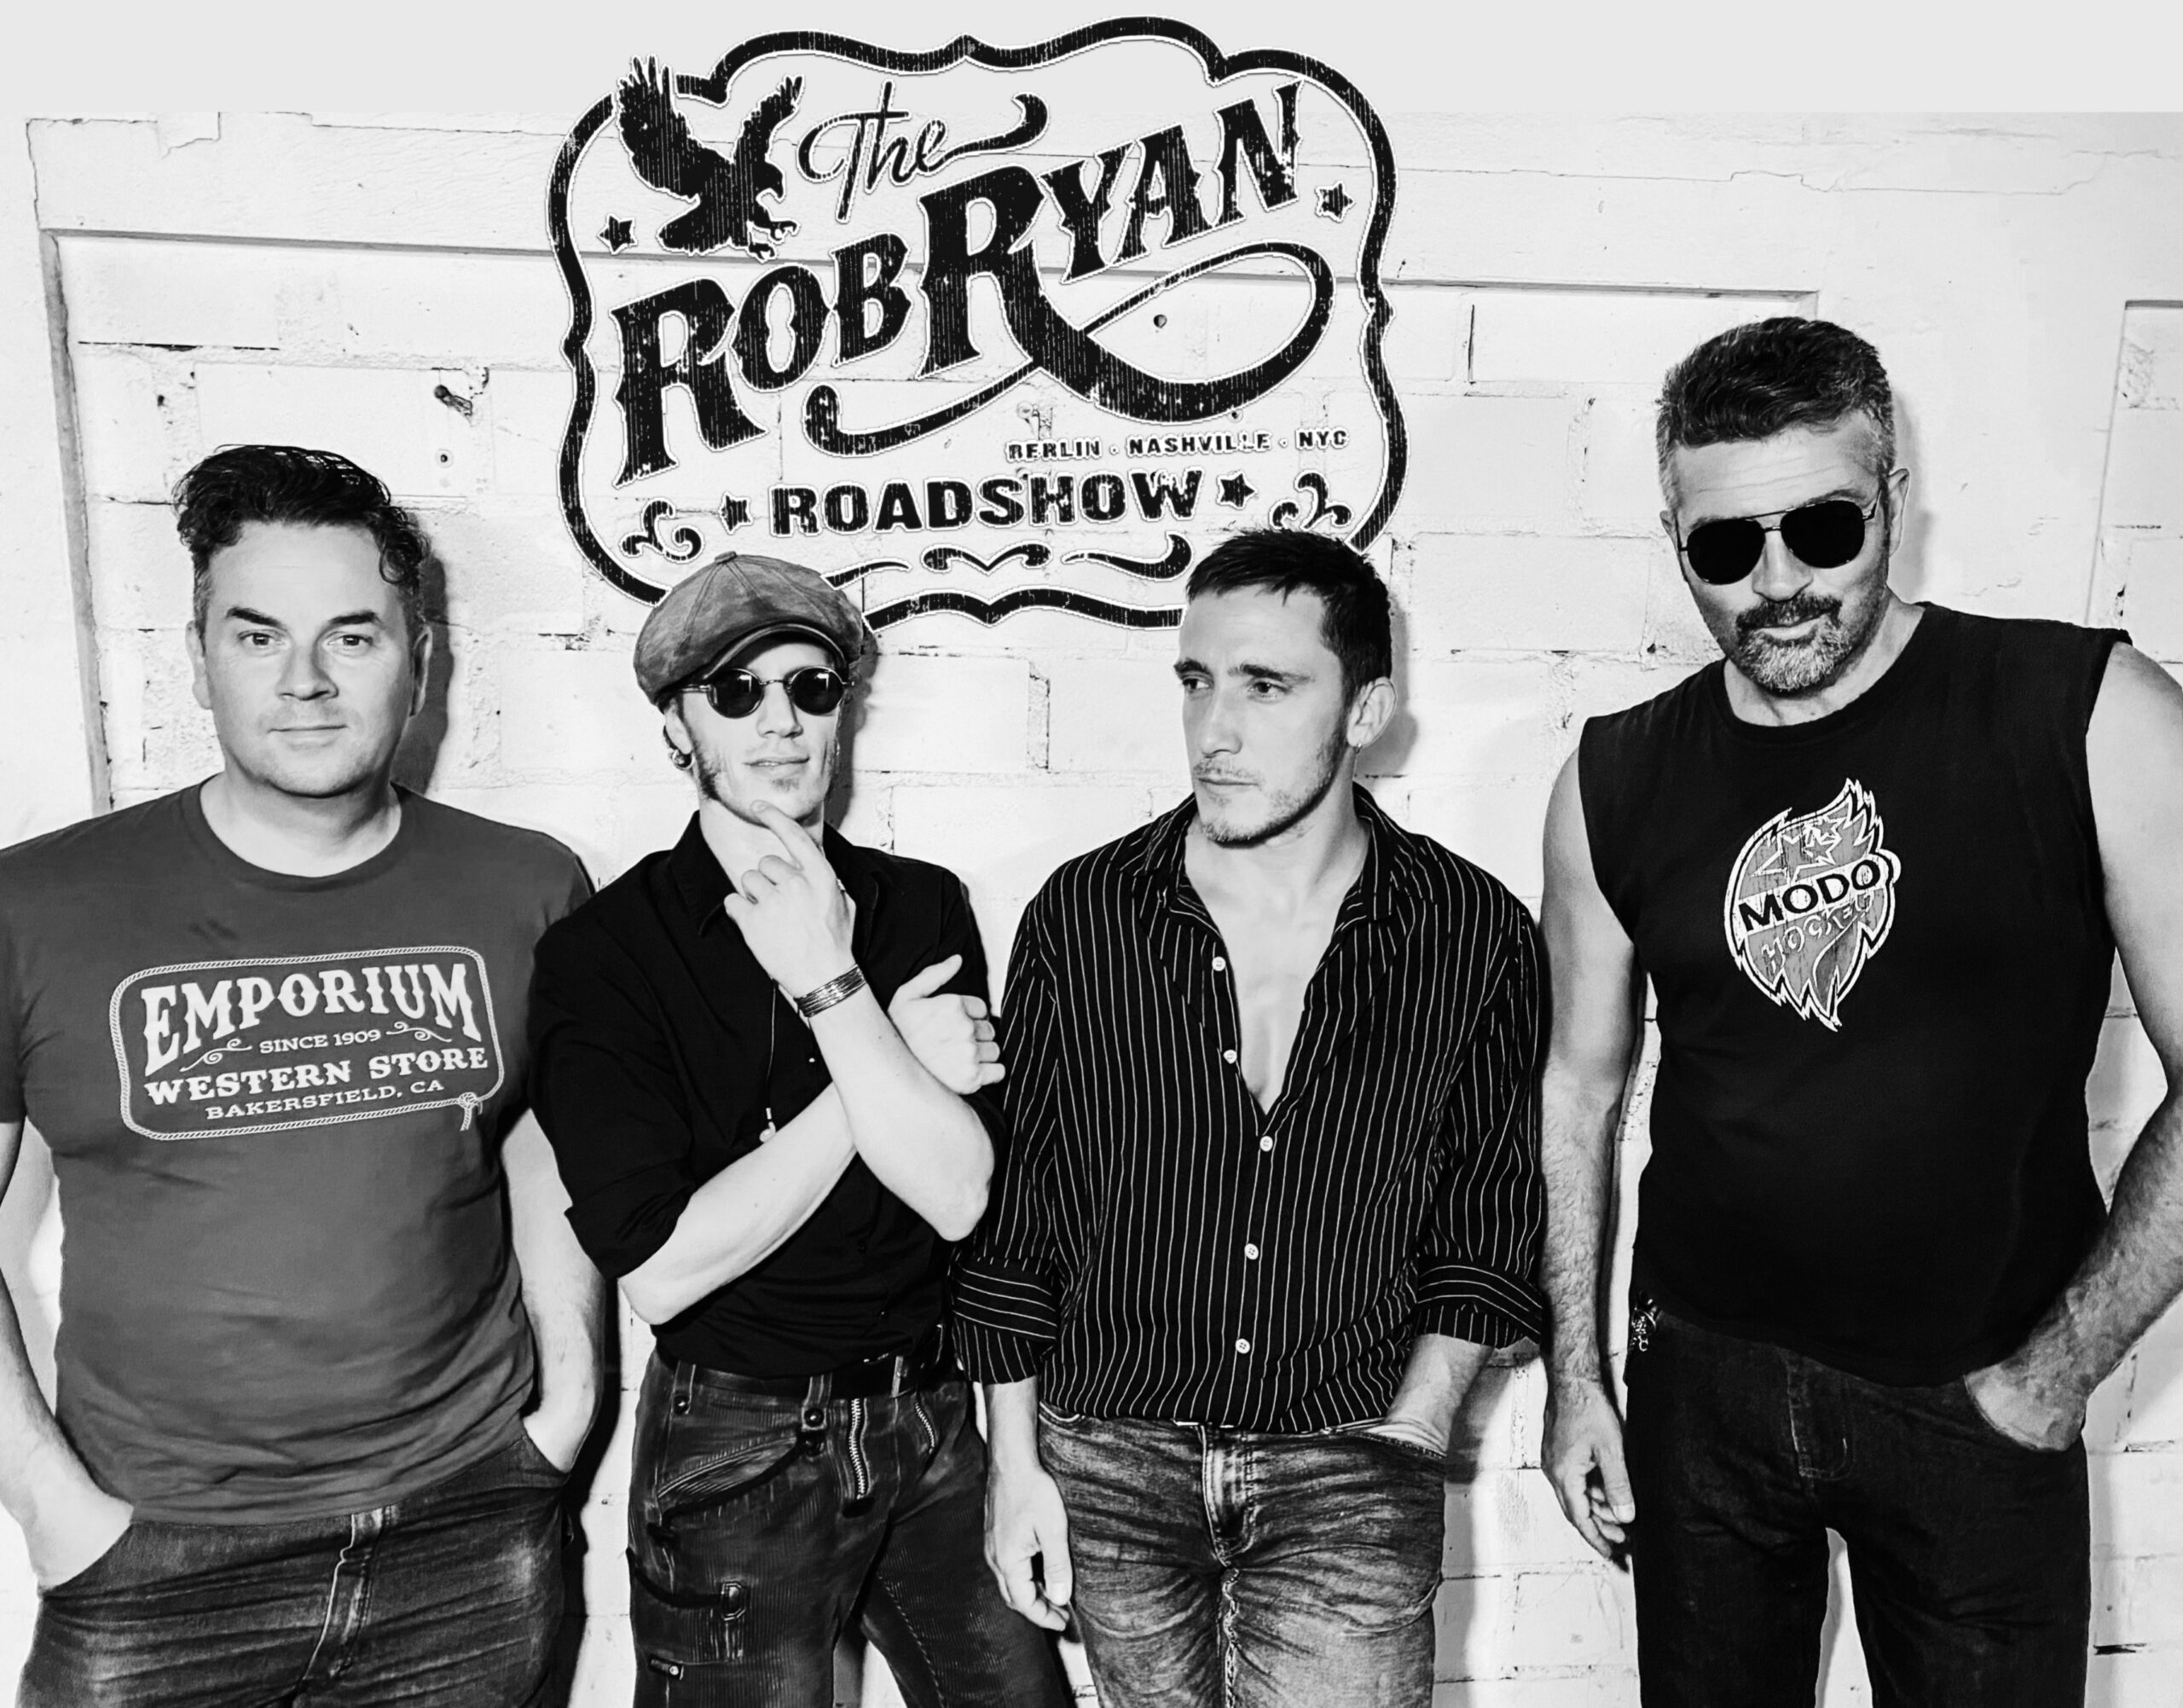 The Rob Ryan Road Show